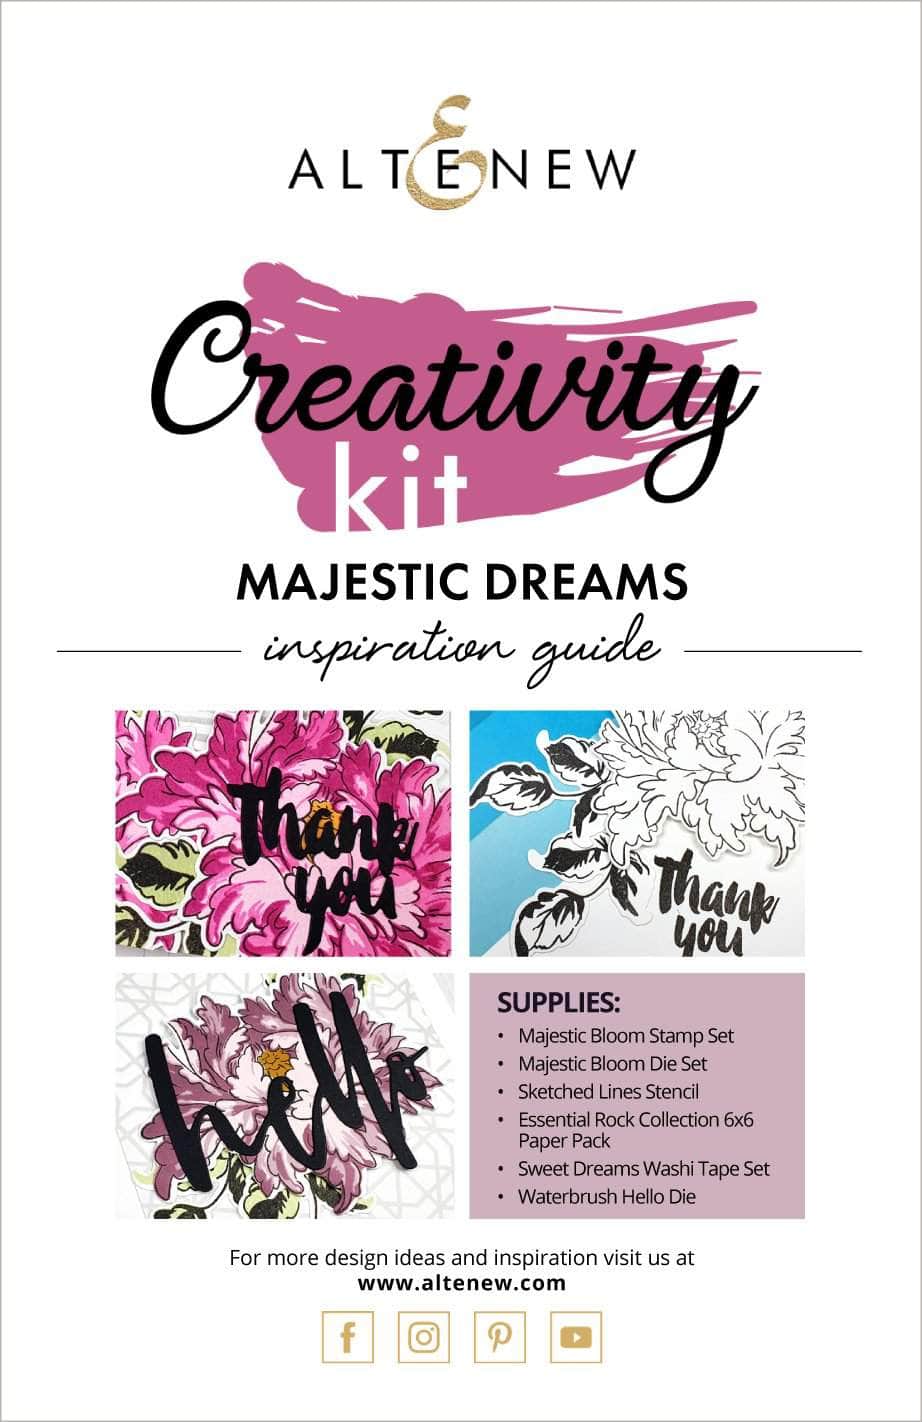 55Printing.com Printed Media Majestic Dreams Creativity Kit Inspiration Guide